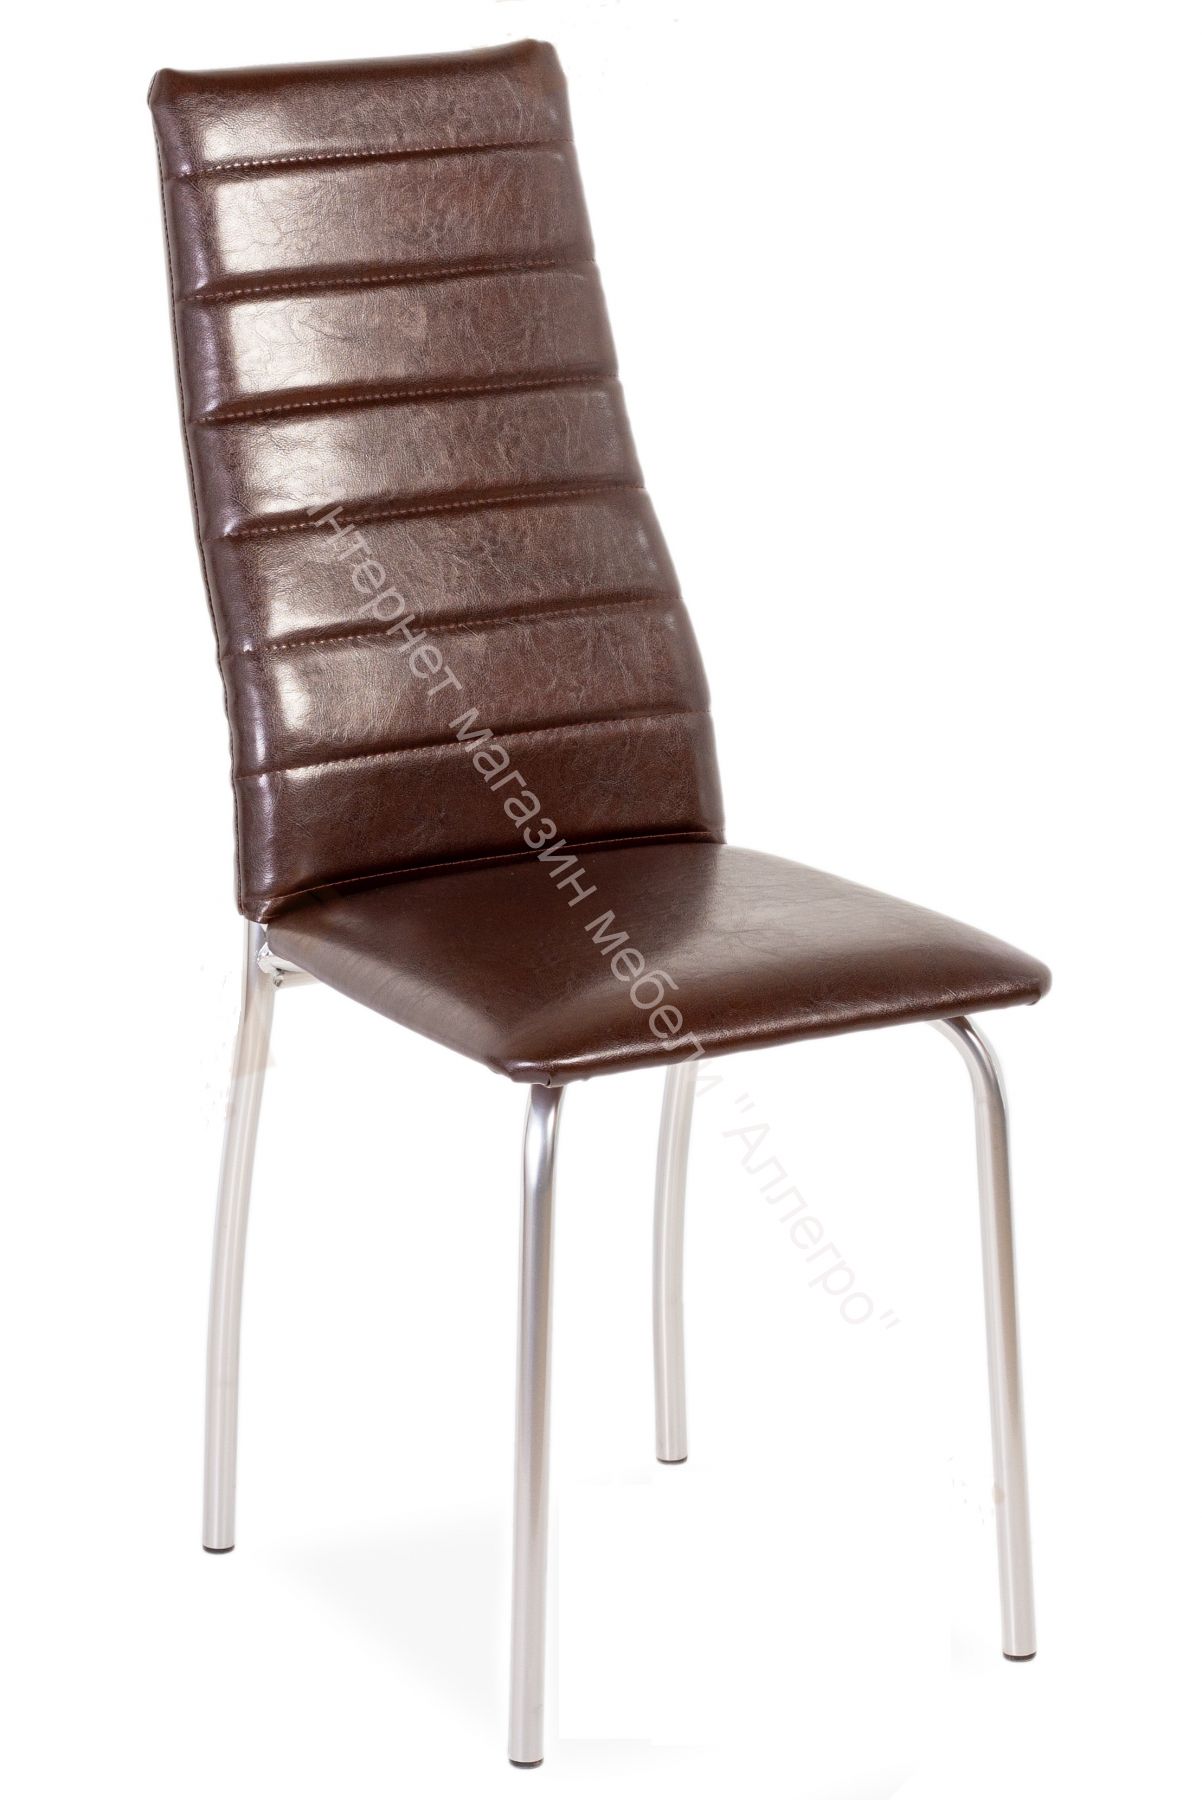 Кухонный стул "Волна" Аттика шоколад/Опоры хром люкс